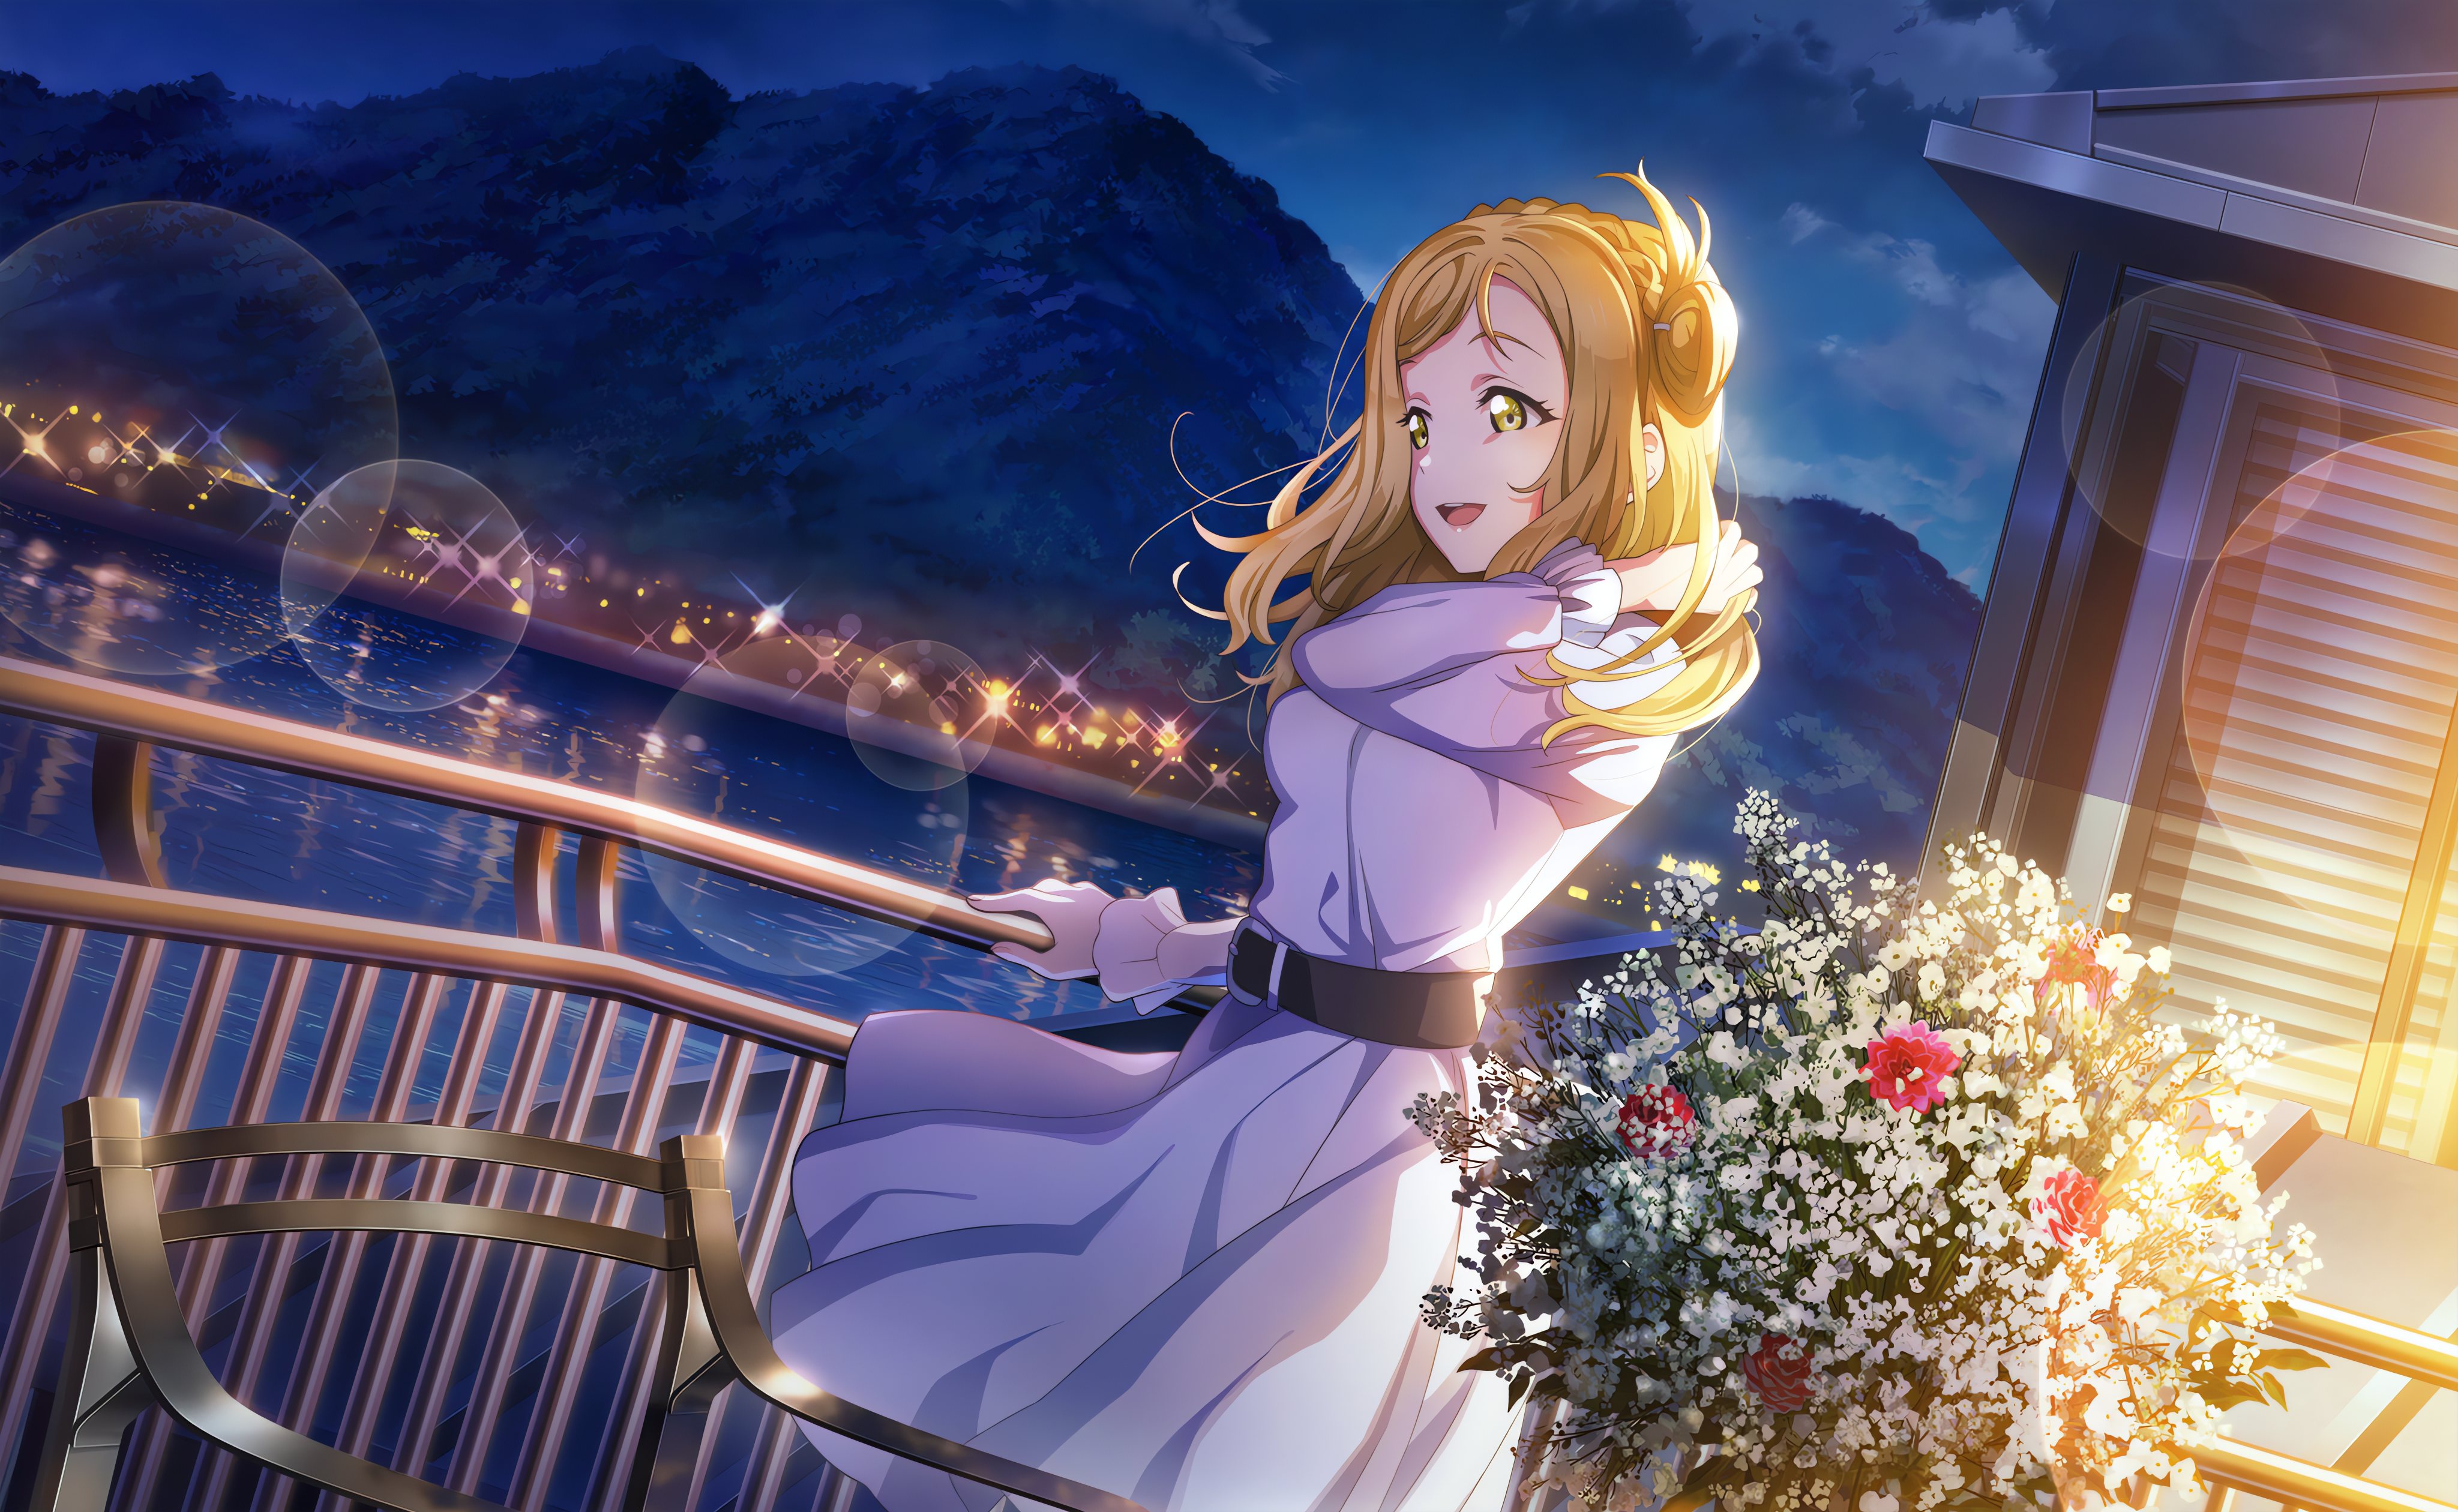 Anime 4096x2520 Ohara Mari Love Live! Love Live! Sunshine anime anime girls flowers night mountains sky clouds water city city lights blonde looking away lights